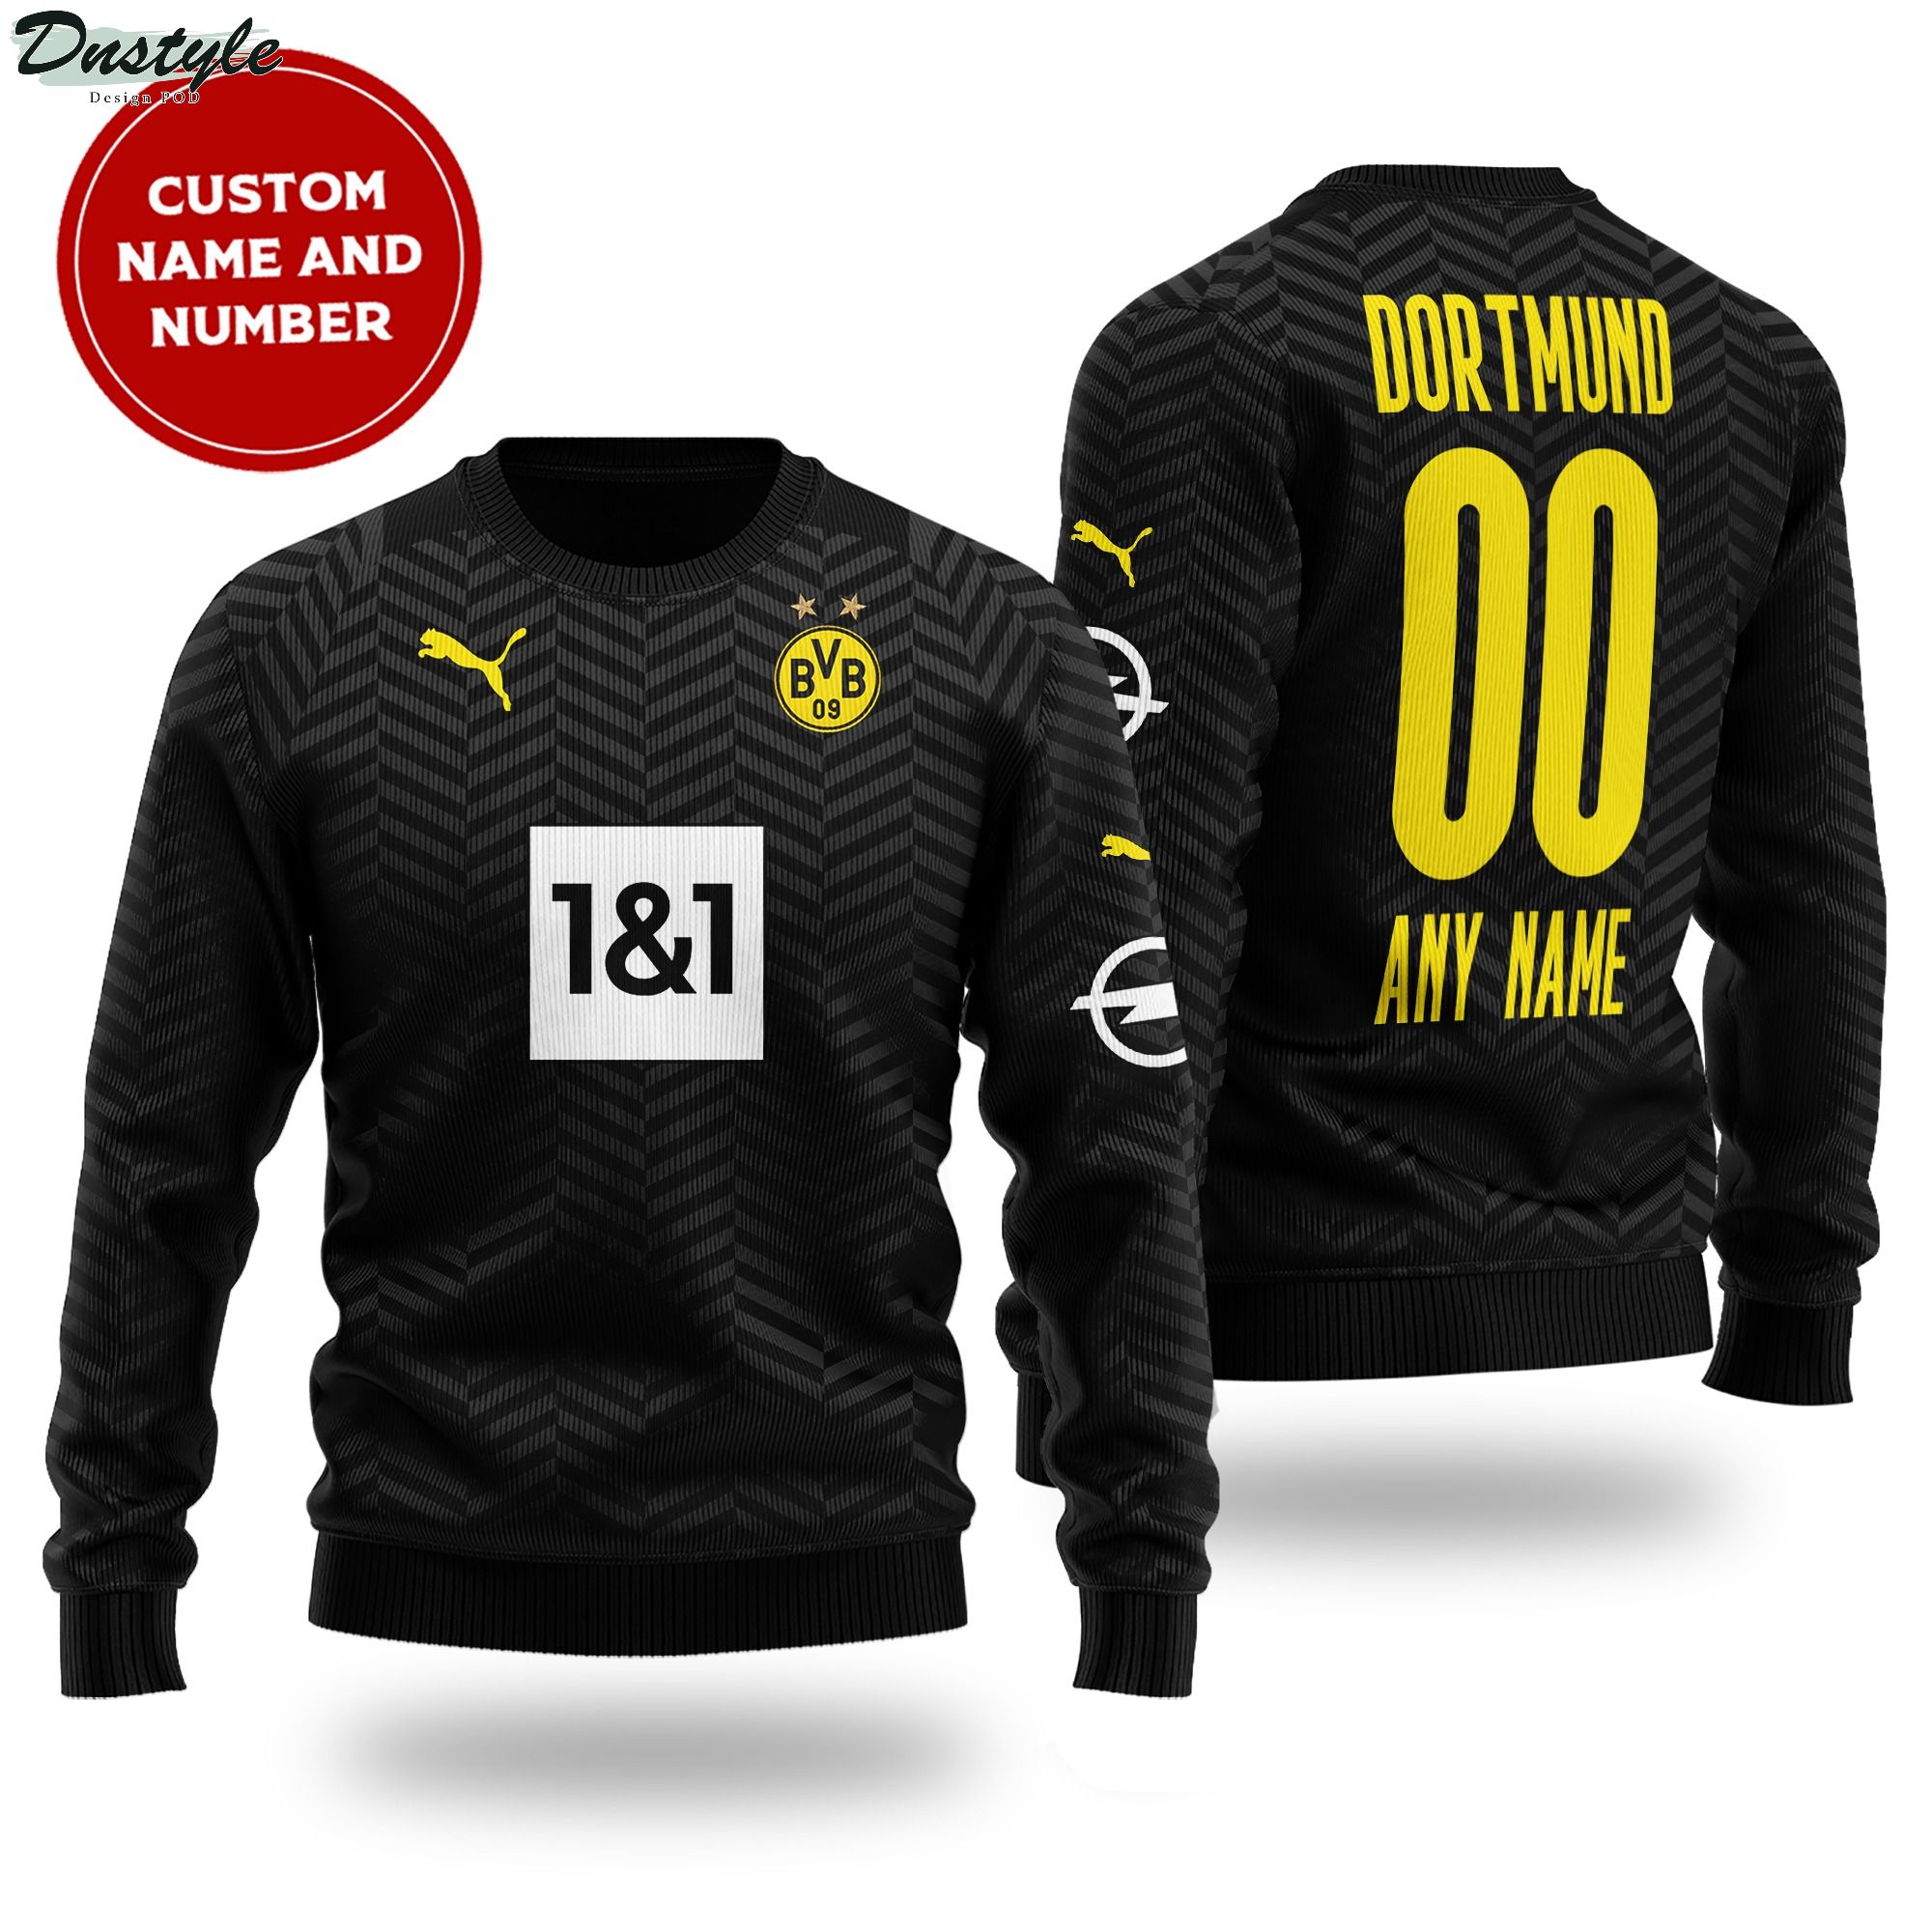 Borussia dortmund black custom name and number ugly sweater